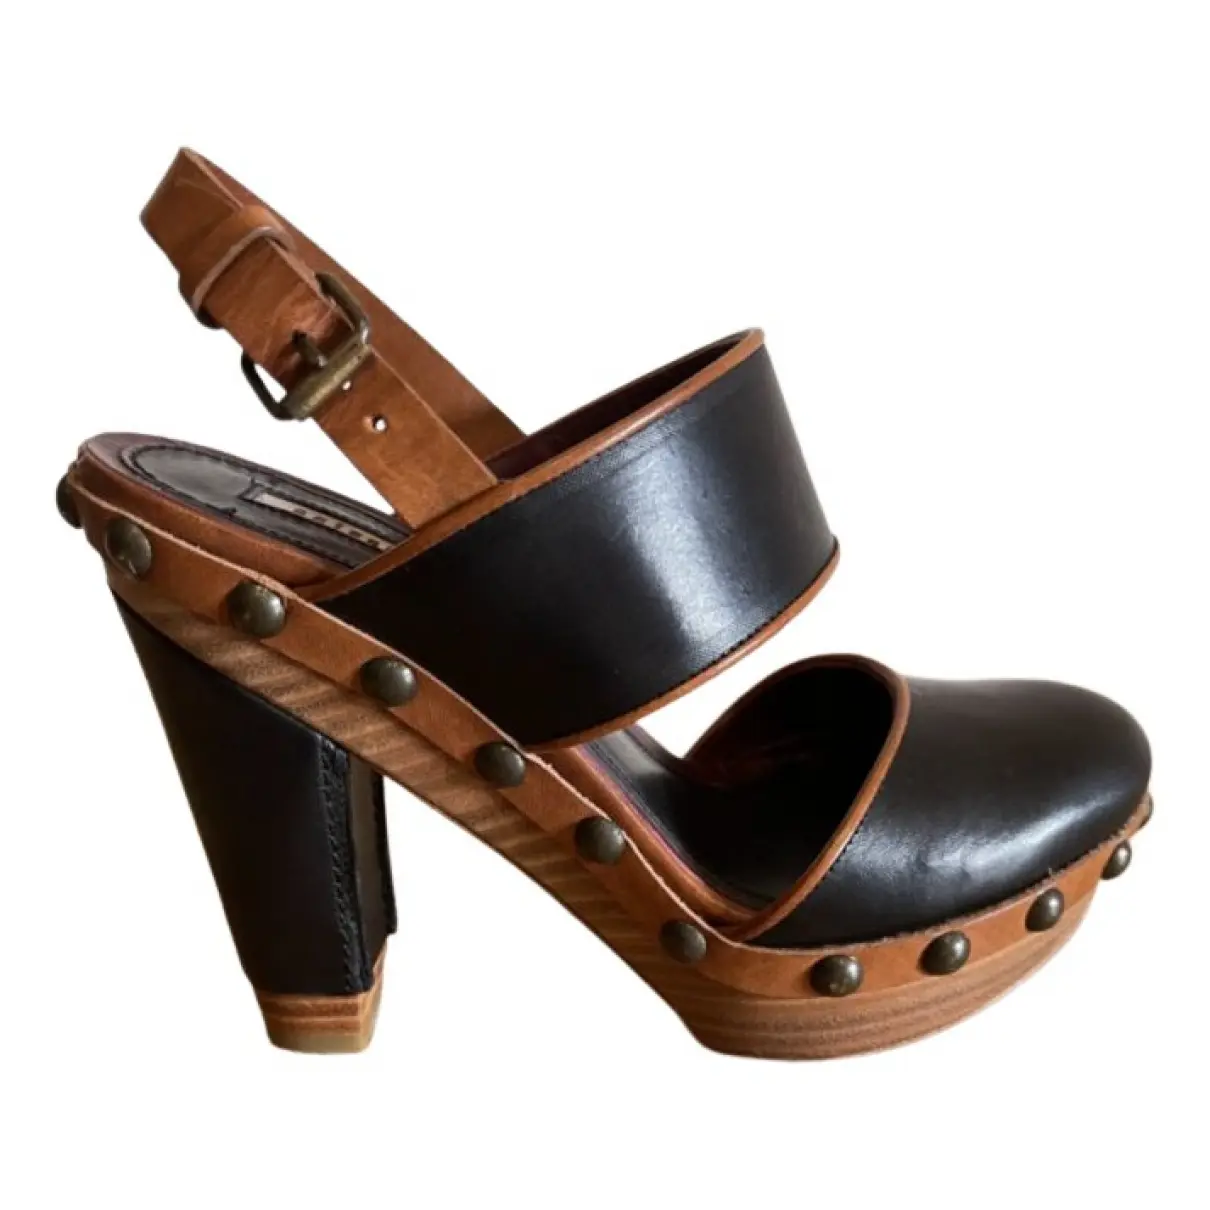 Leather sandals Antonio Marras